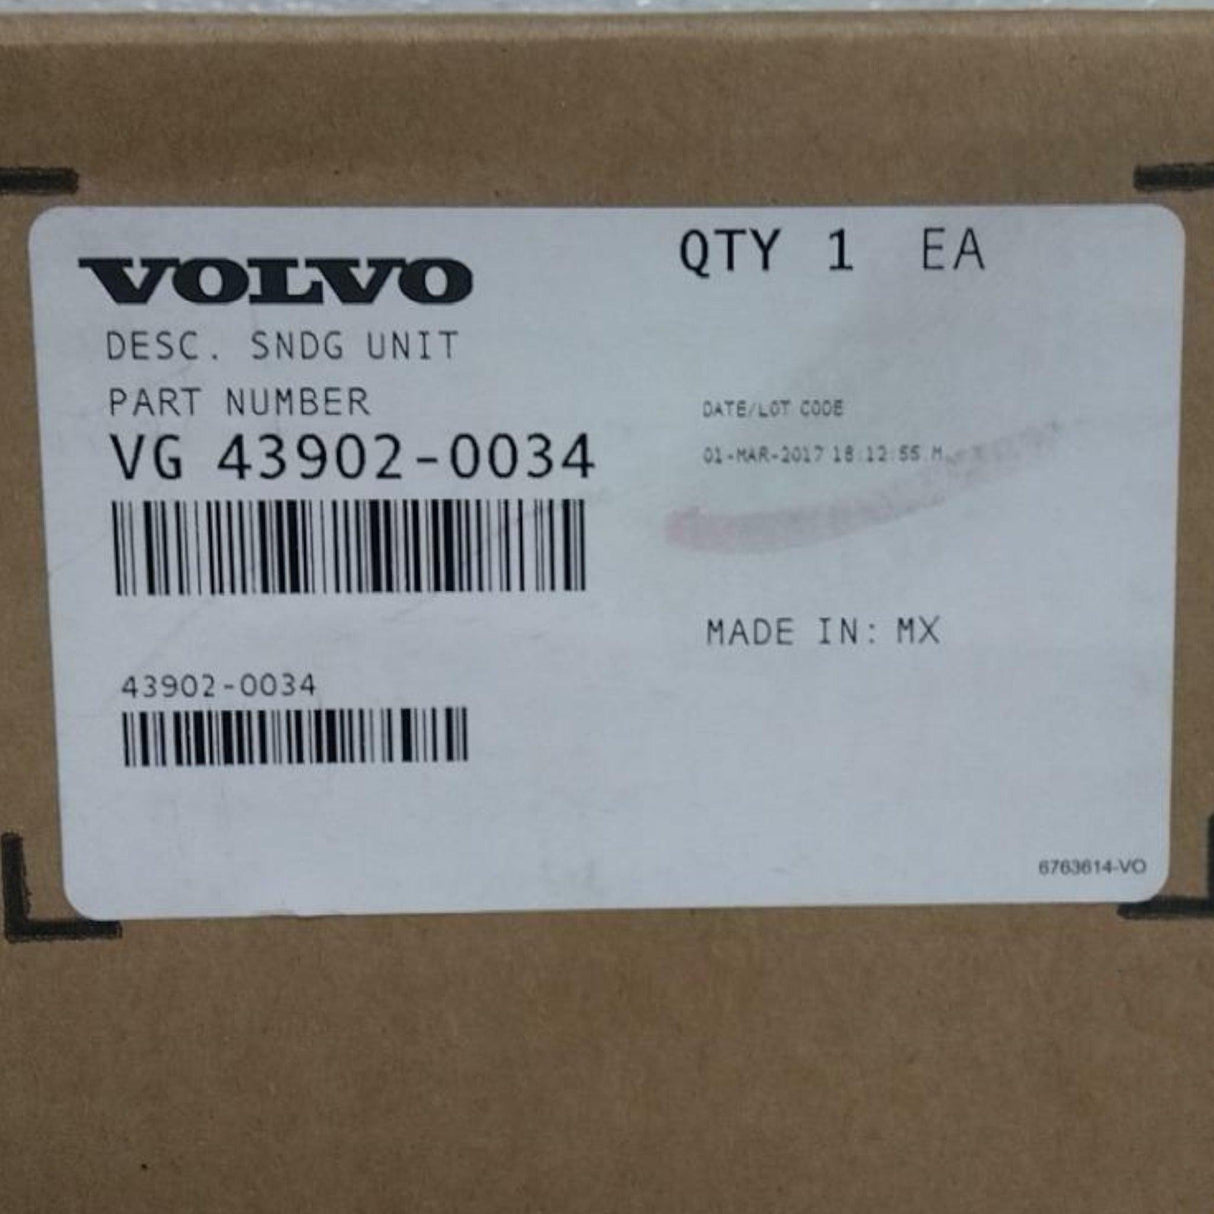 43902-0034 Genuine Volvo Sndg Unit.